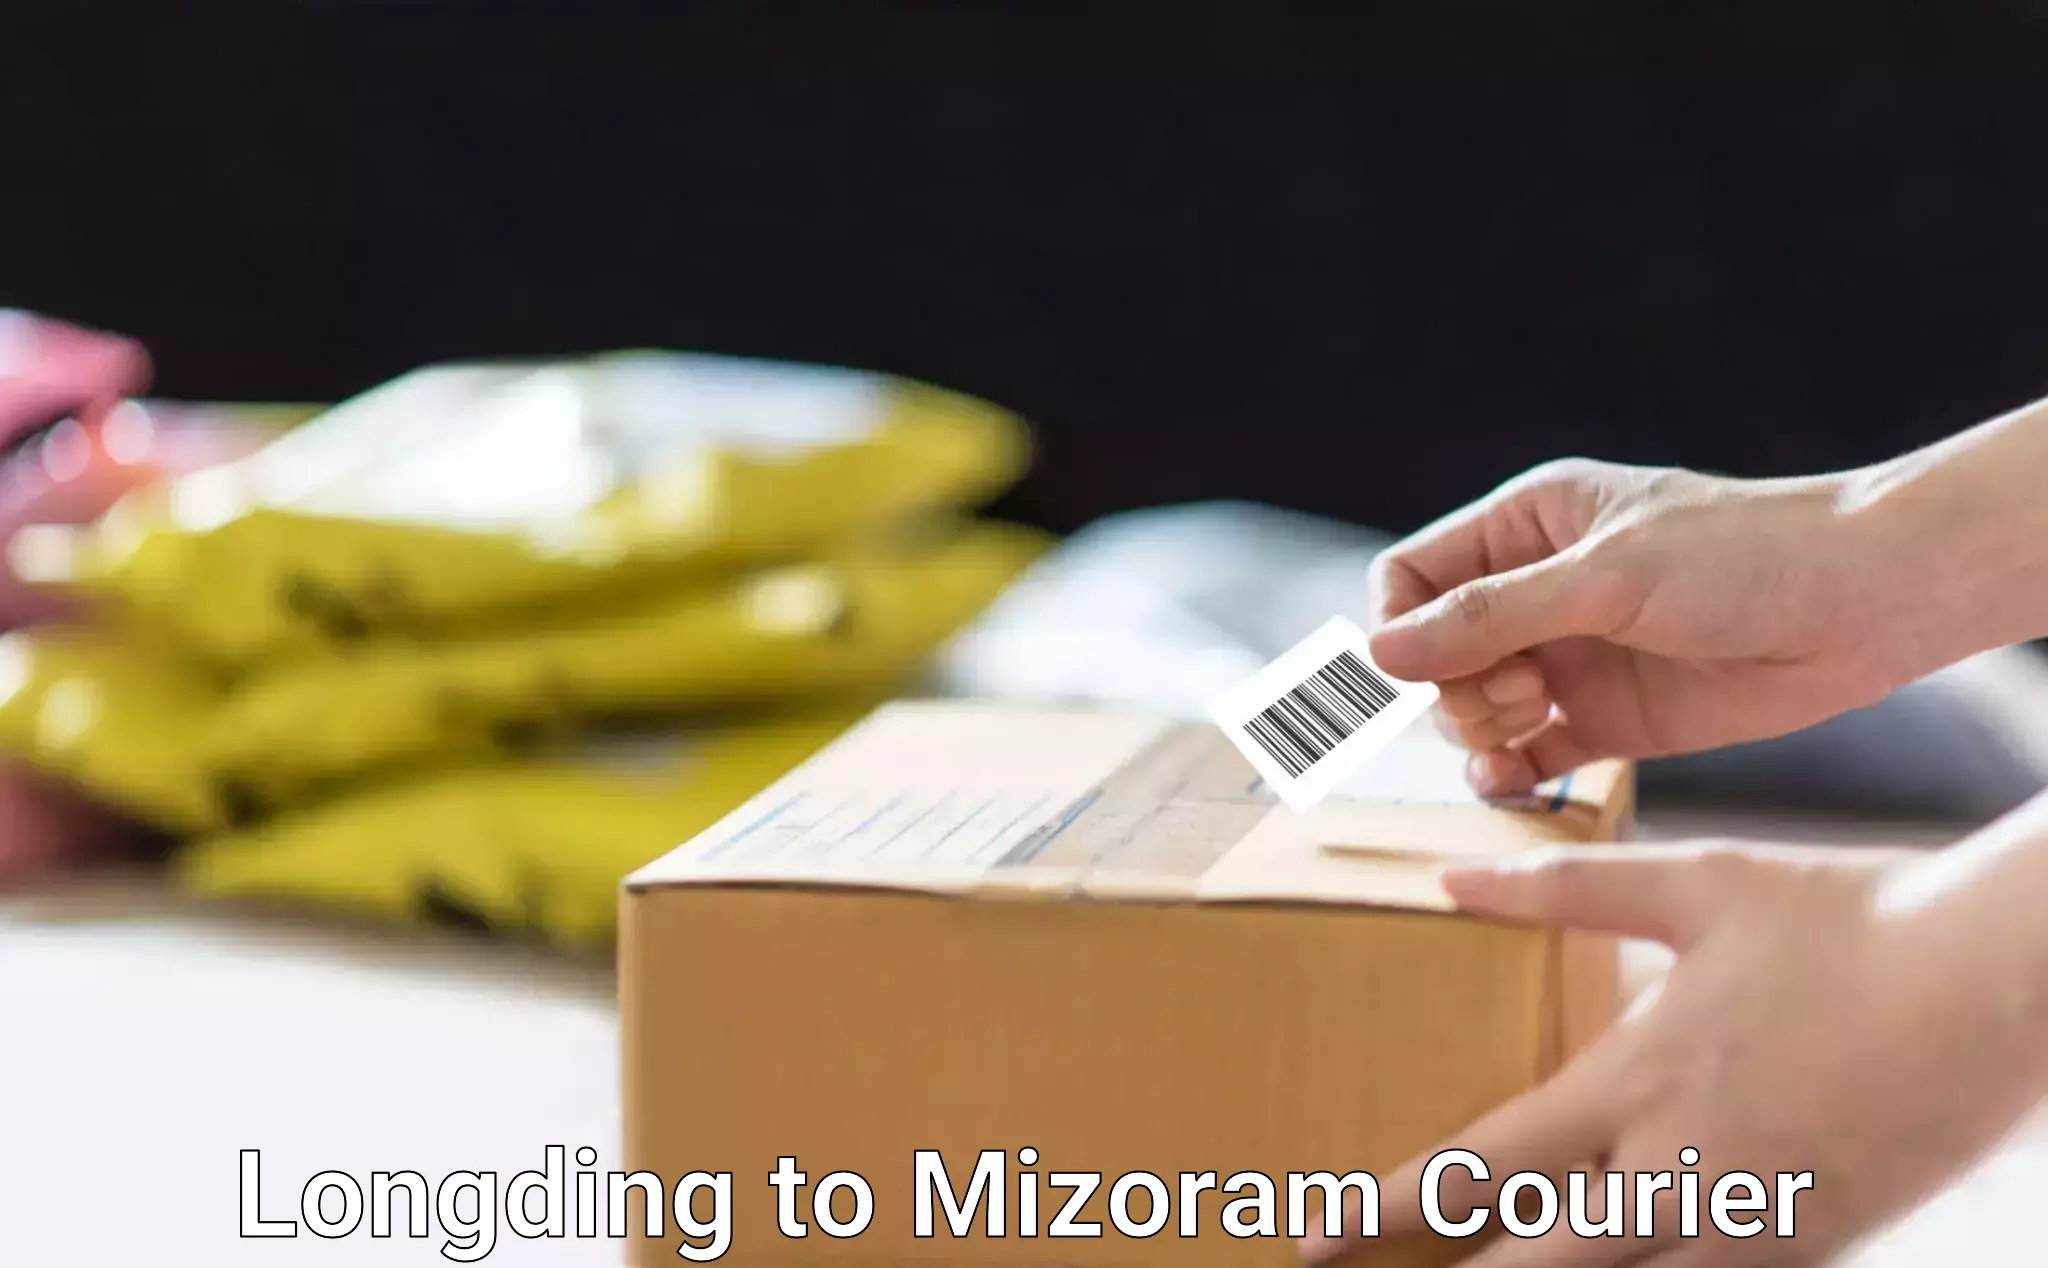 Courier service partnerships Longding to Mizoram